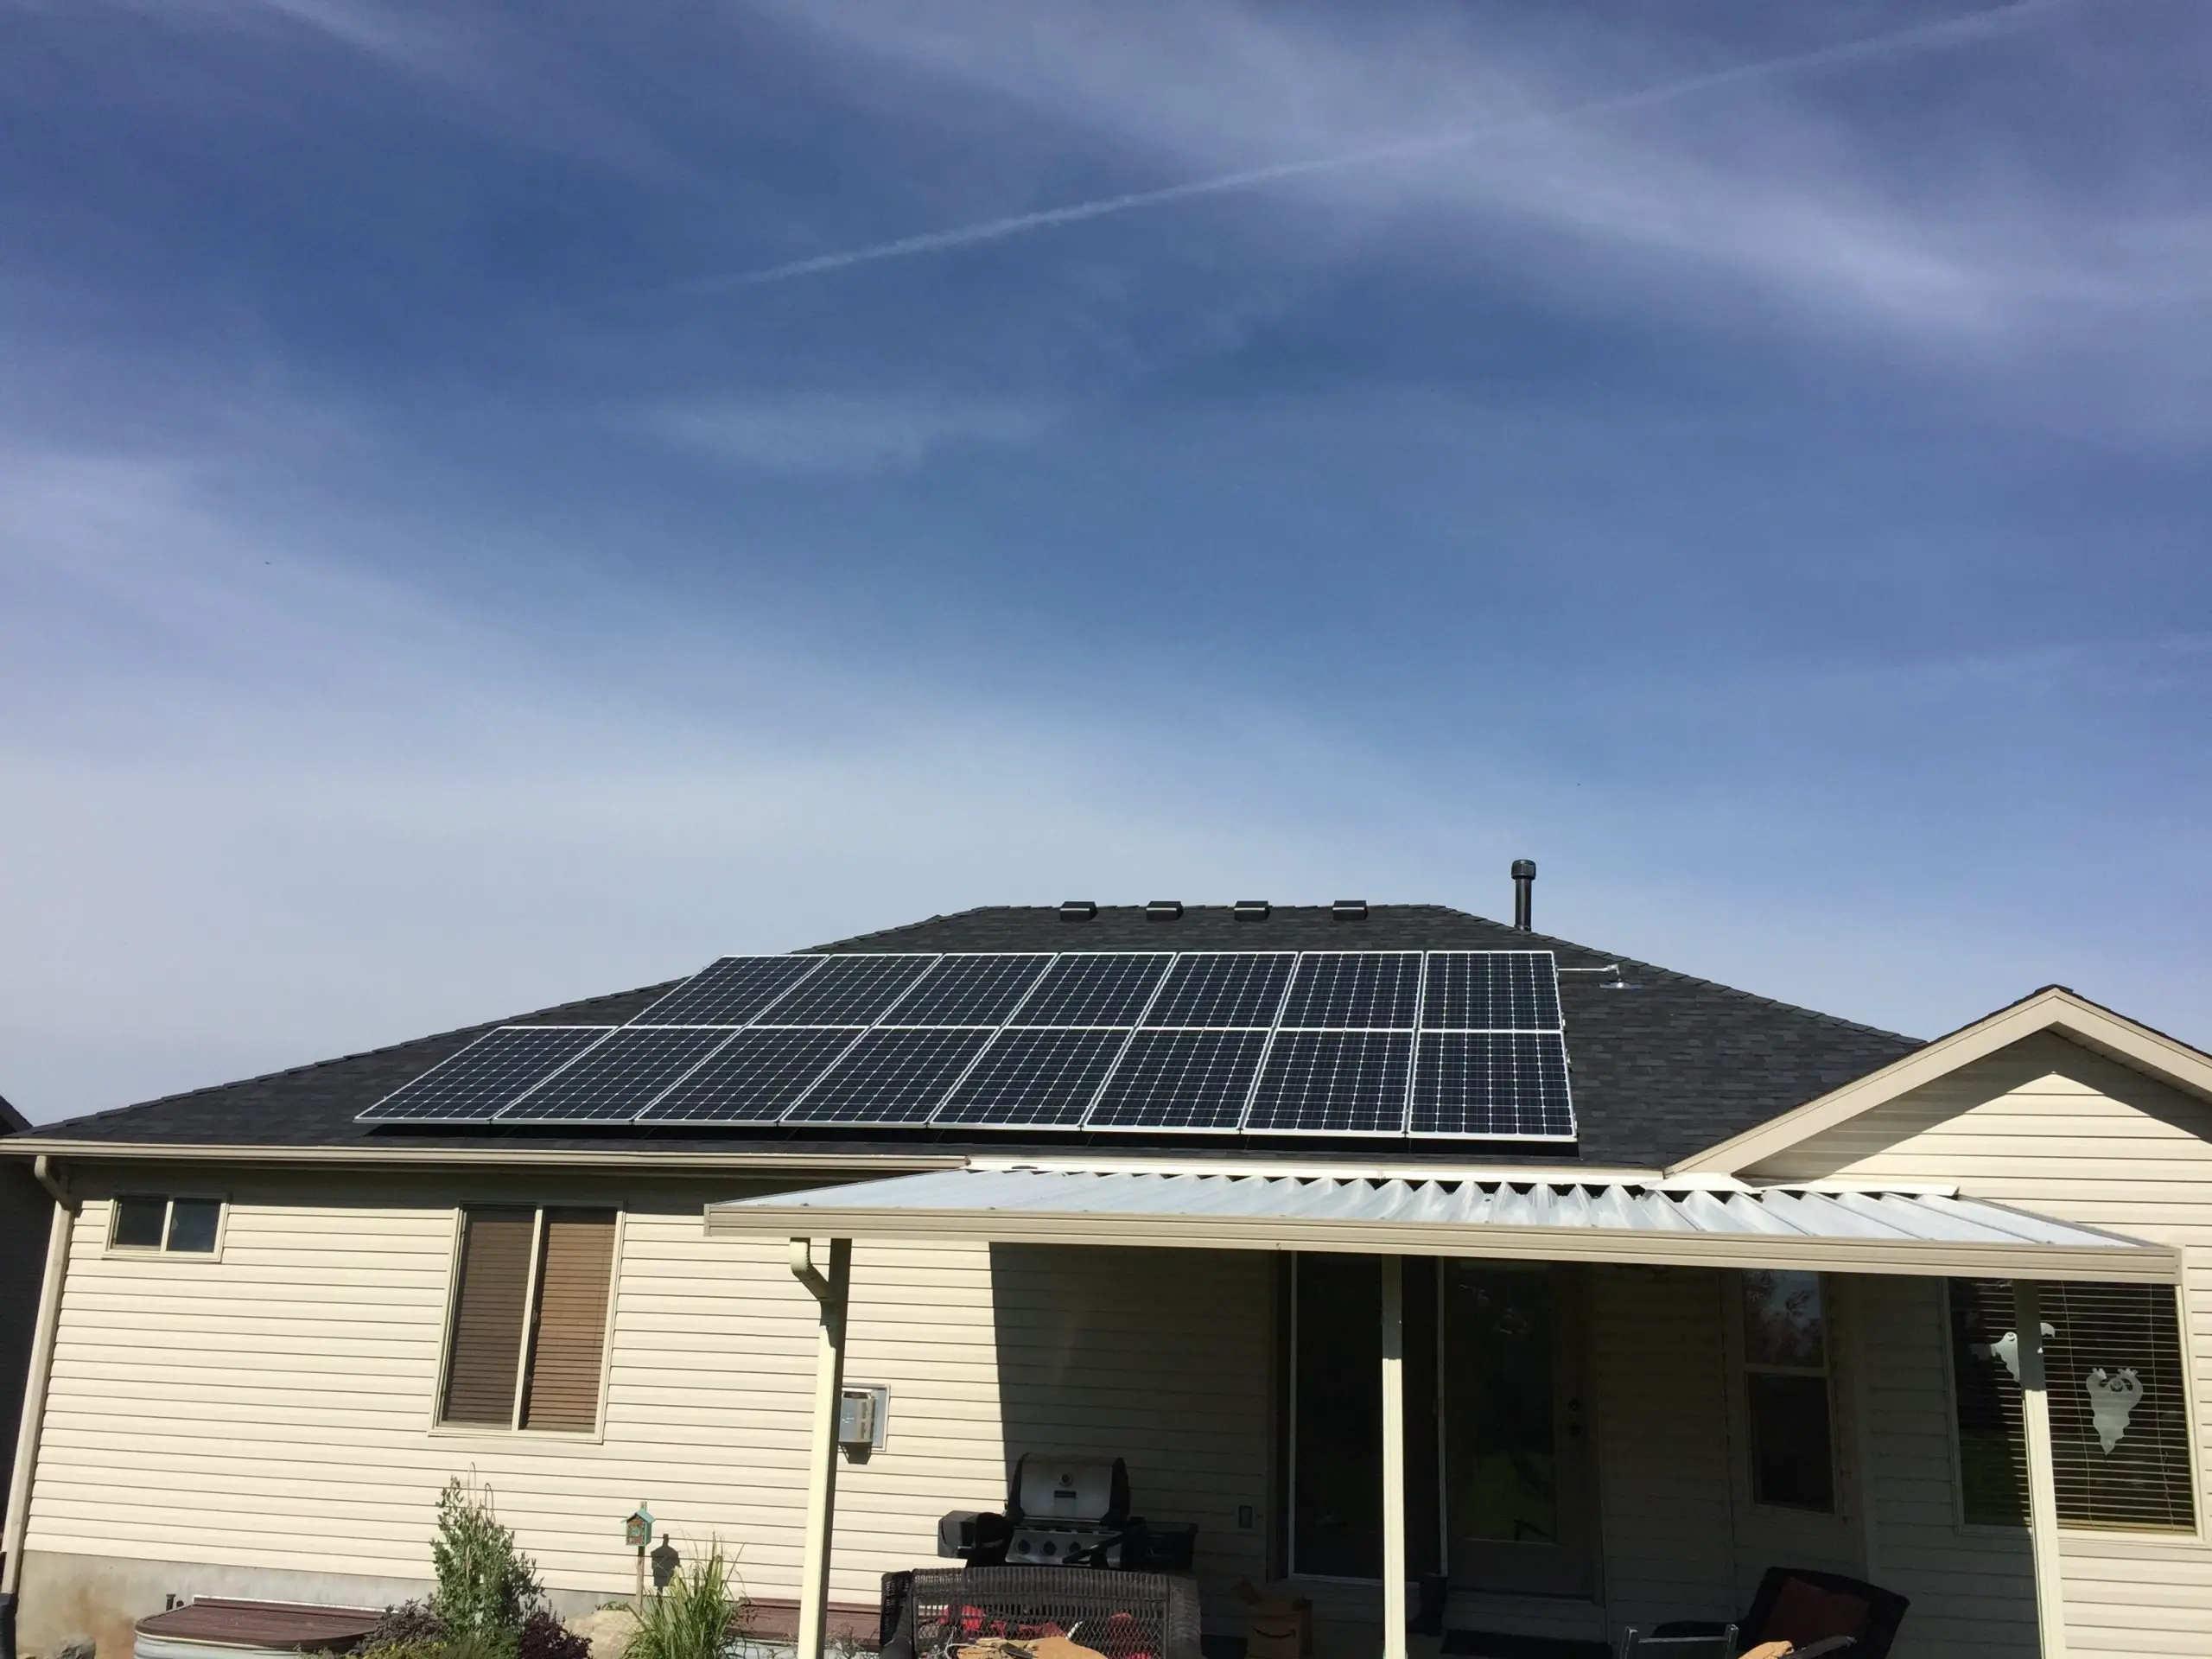 I have a roof. So I put solar panels on it. : DIY